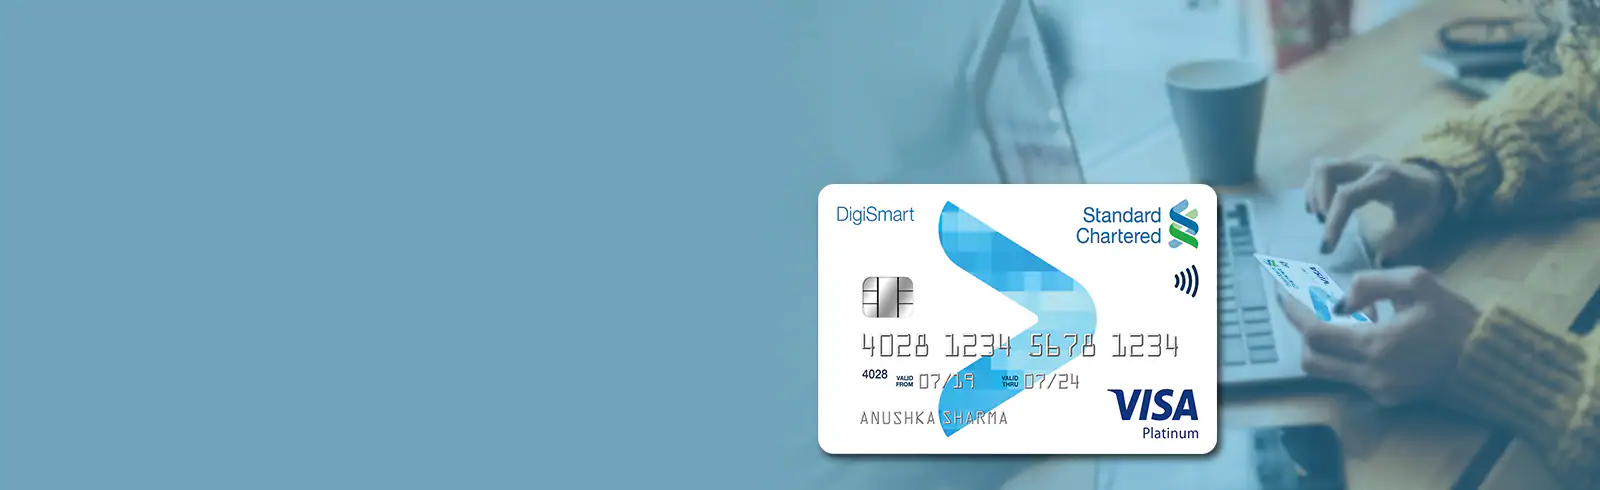 Standard Chartered DigiSmart Credit Card_Banner